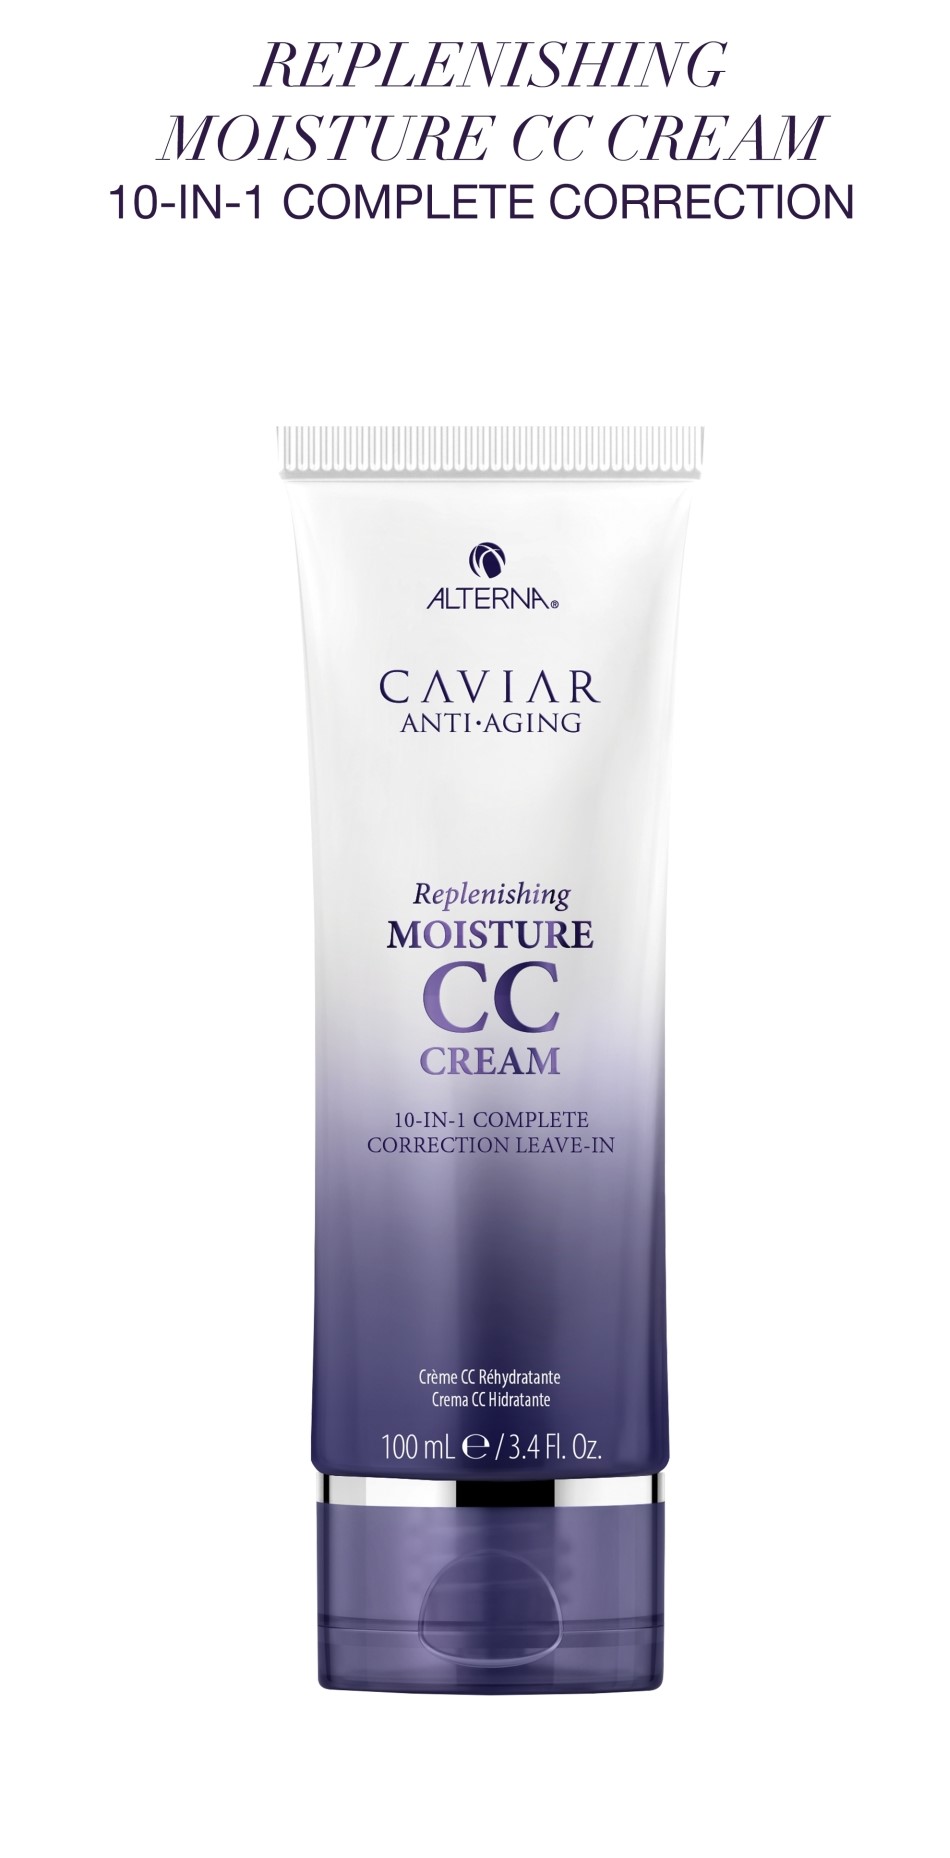 ALTERNA Caviar CC Cream 100ml